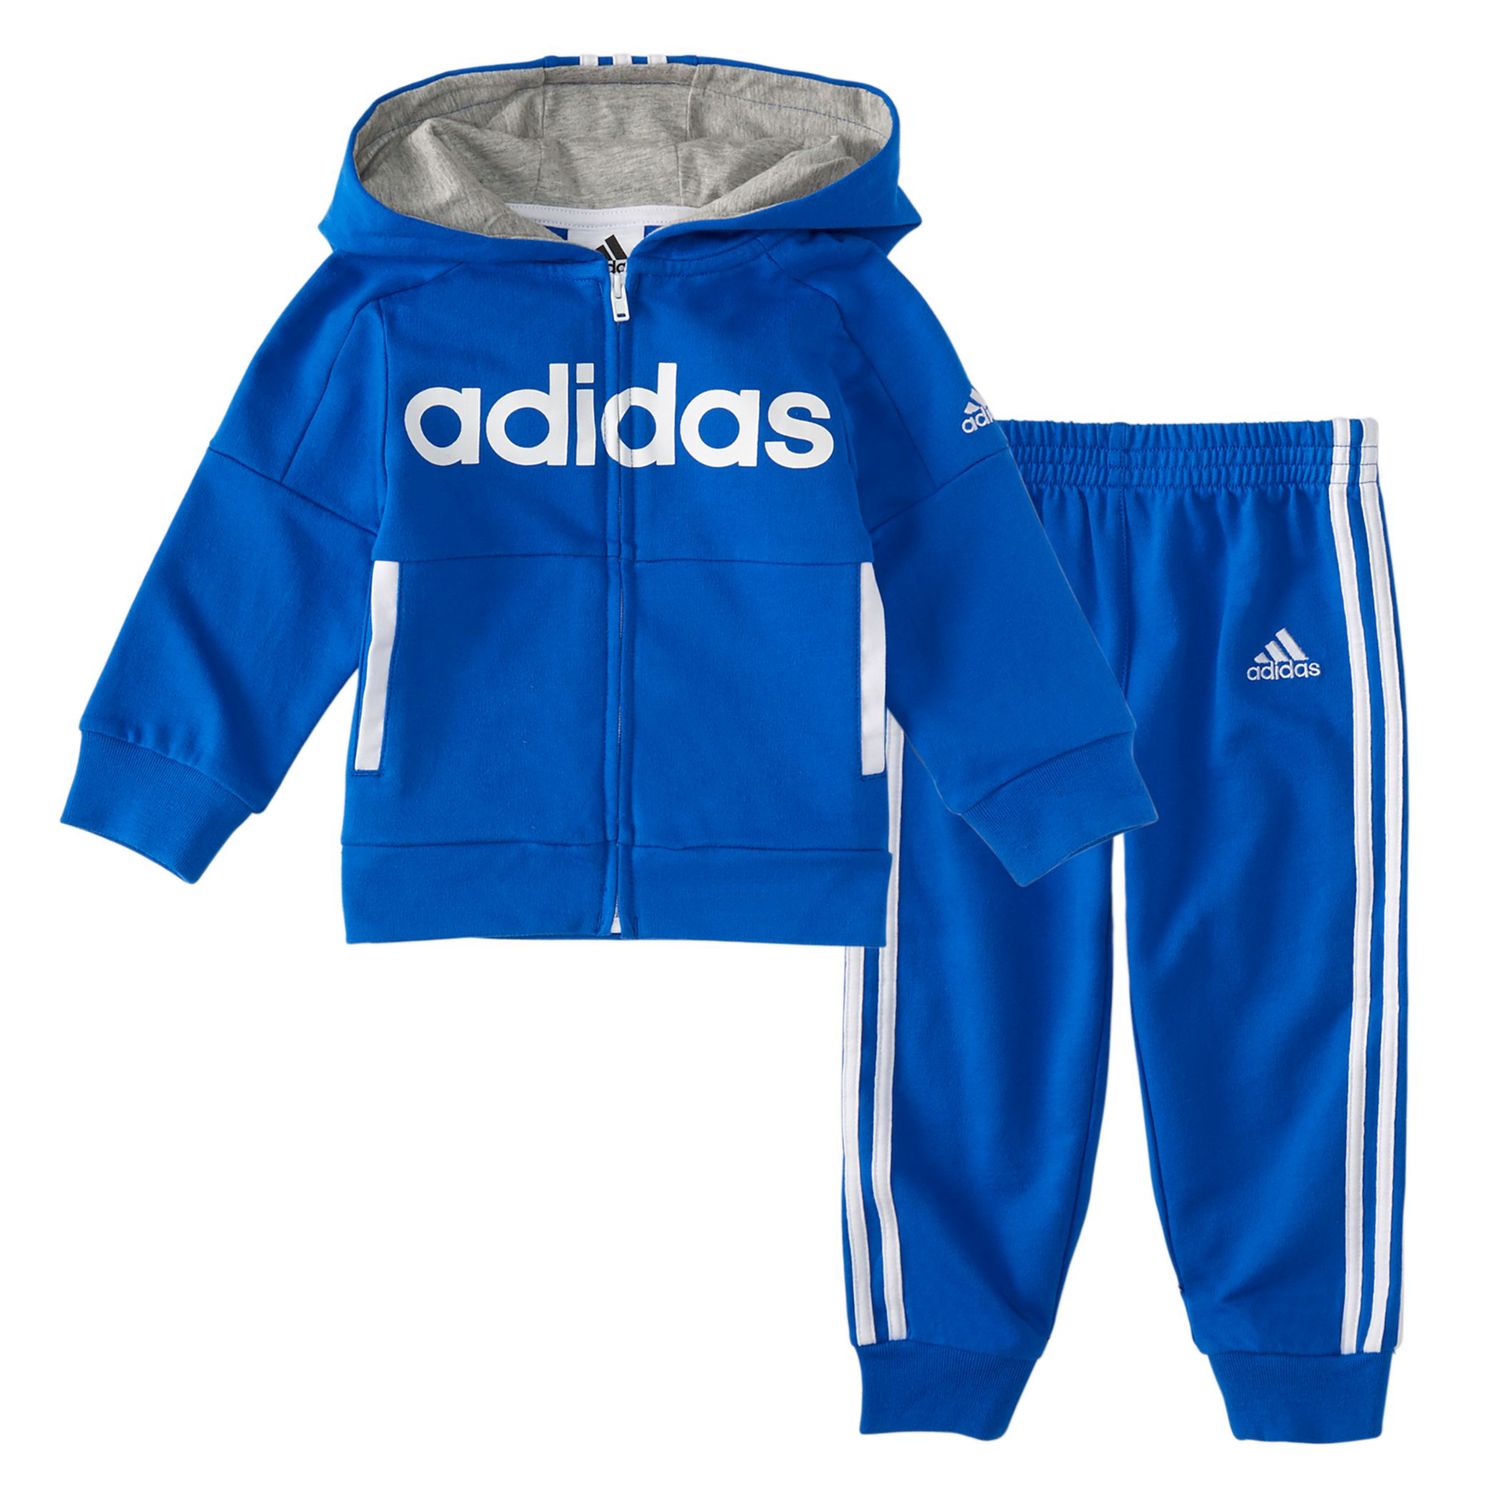 adidas jacket for baby boy